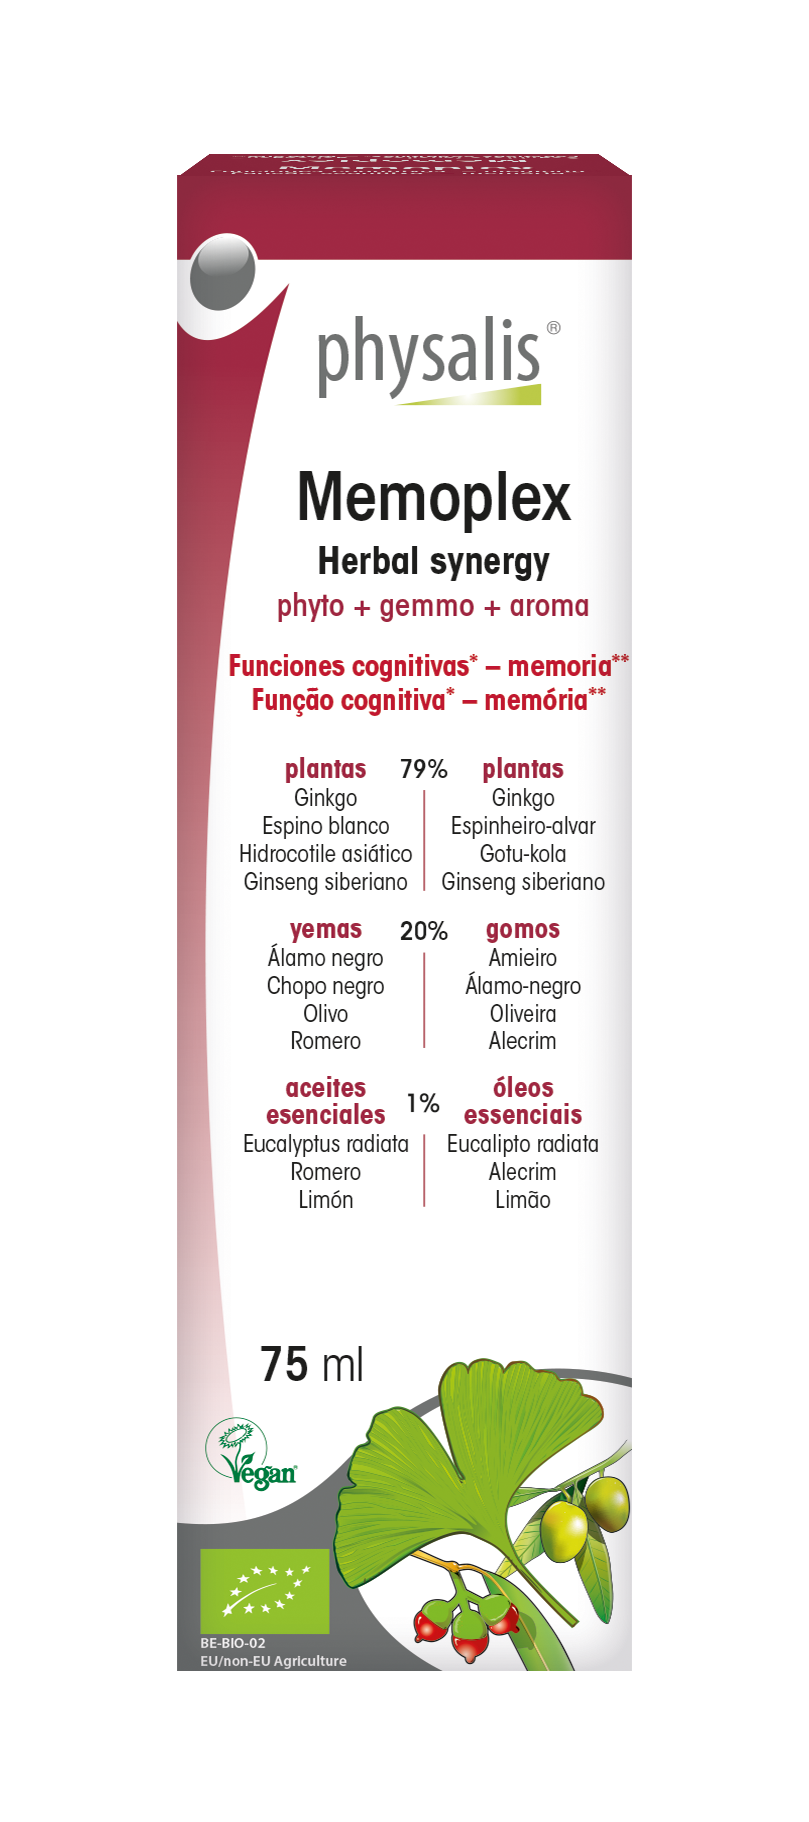 Memoplex Herbal synergy